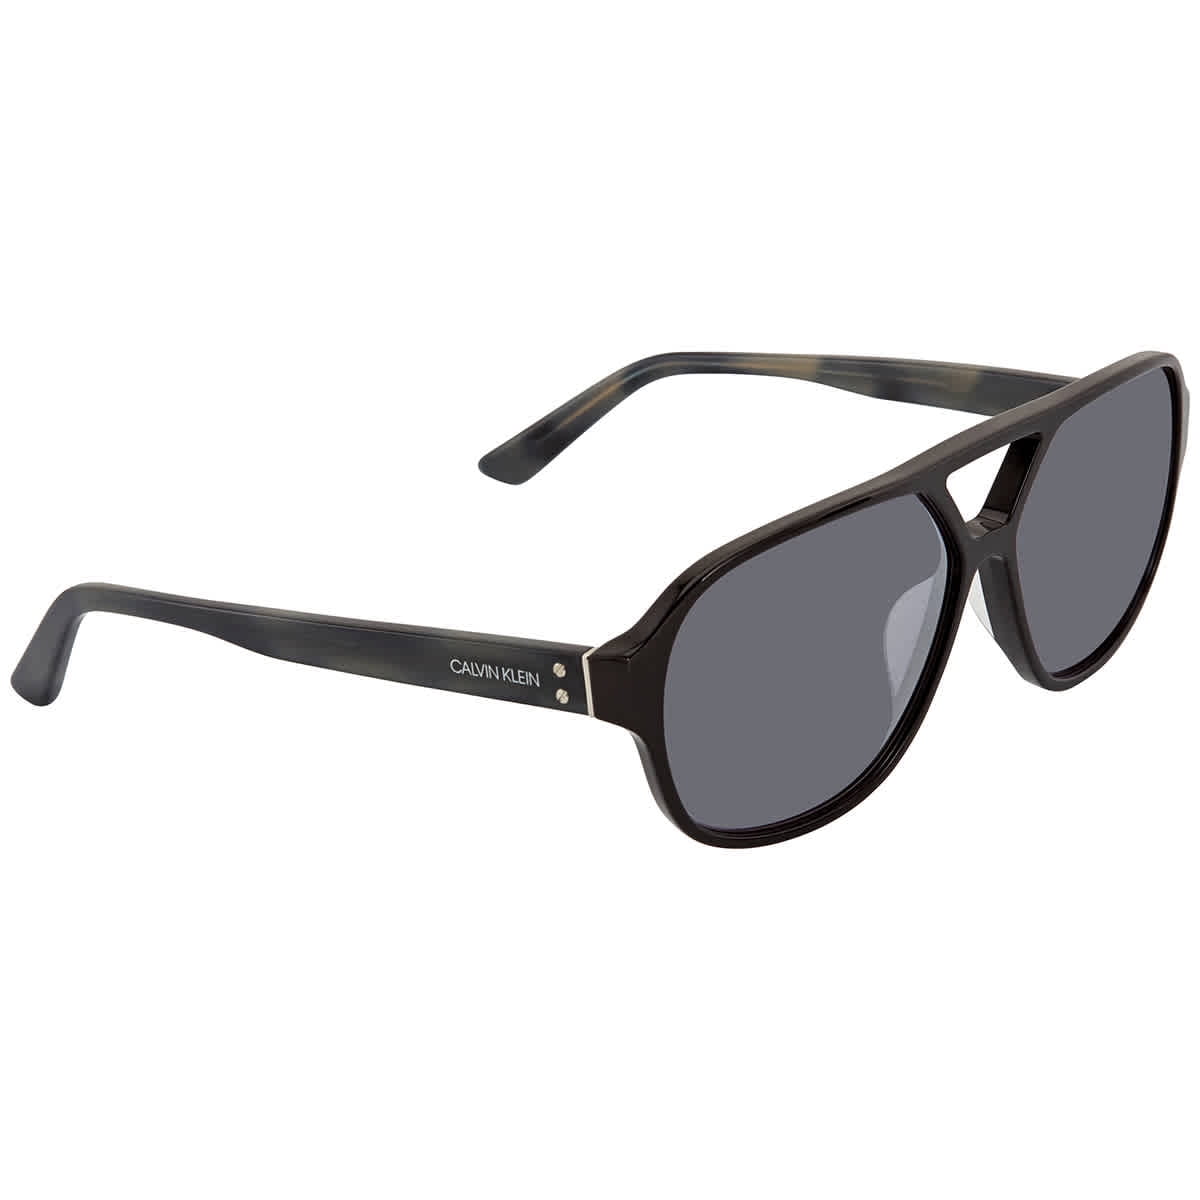 Calvin Klein Grey Mirror Square Men's Sunglasses CK18504S 001 59 -  